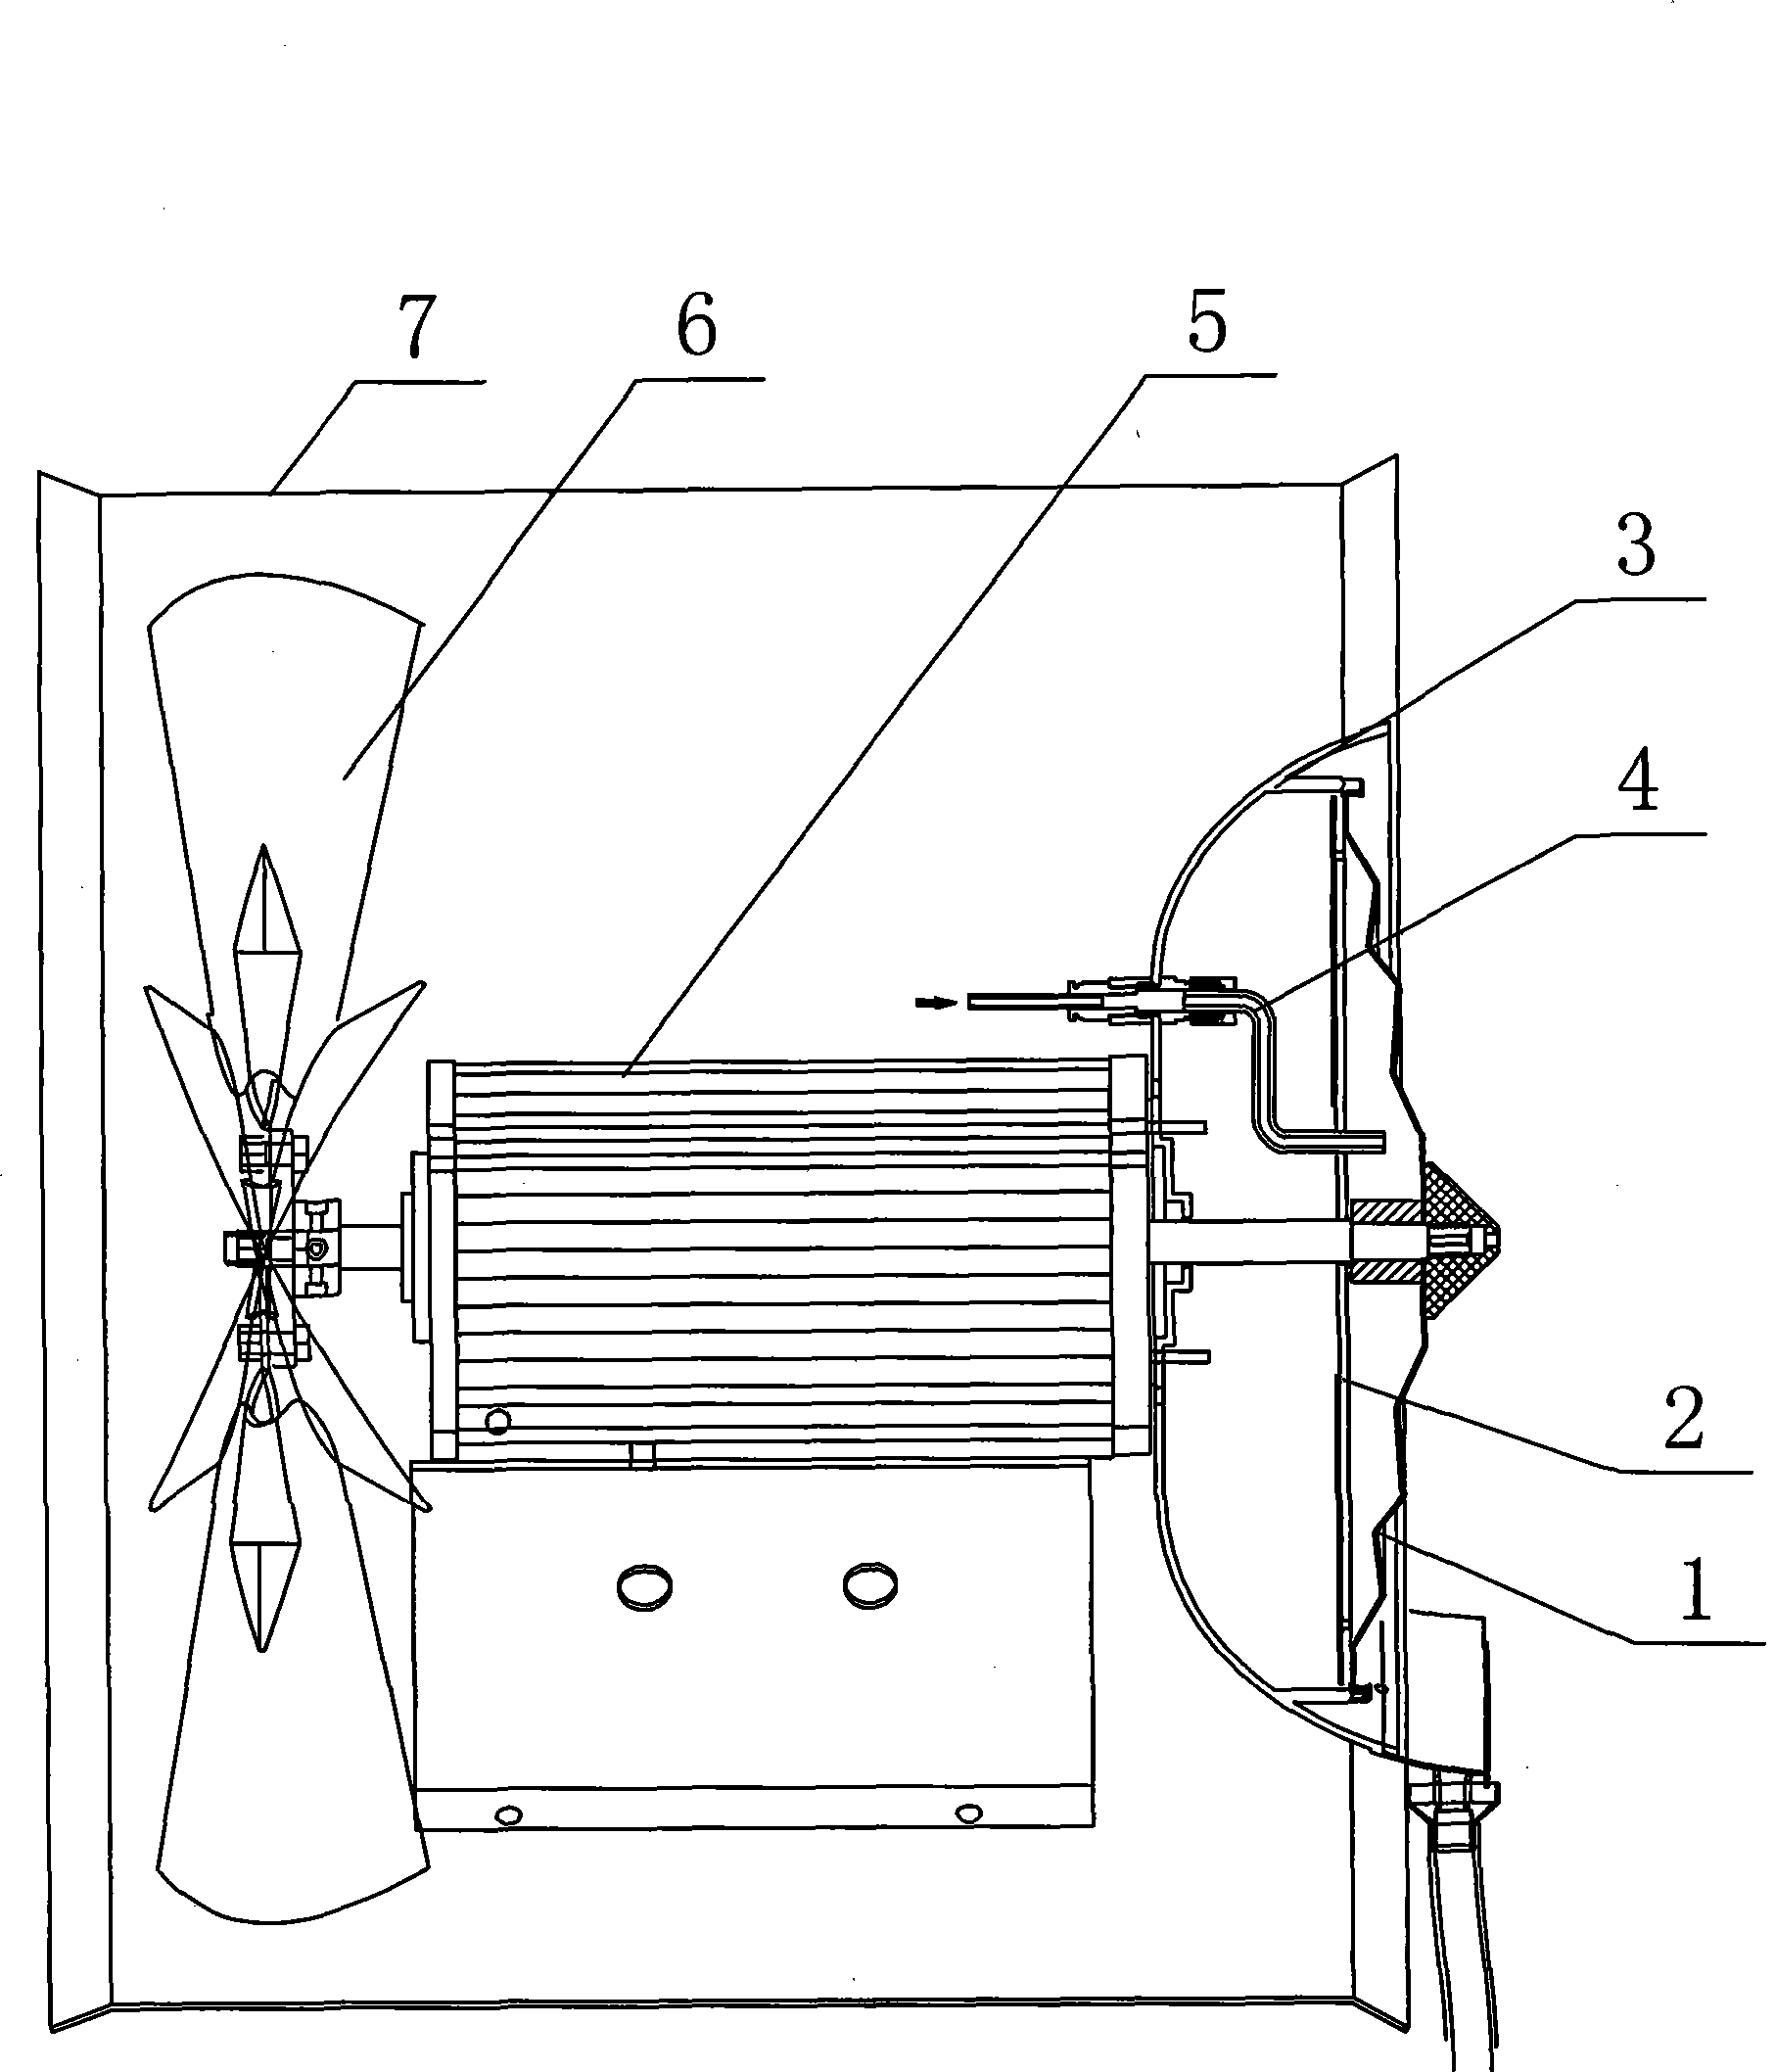 Centrifugation humidifier water diversion apparatus and the centrifugation humidifier